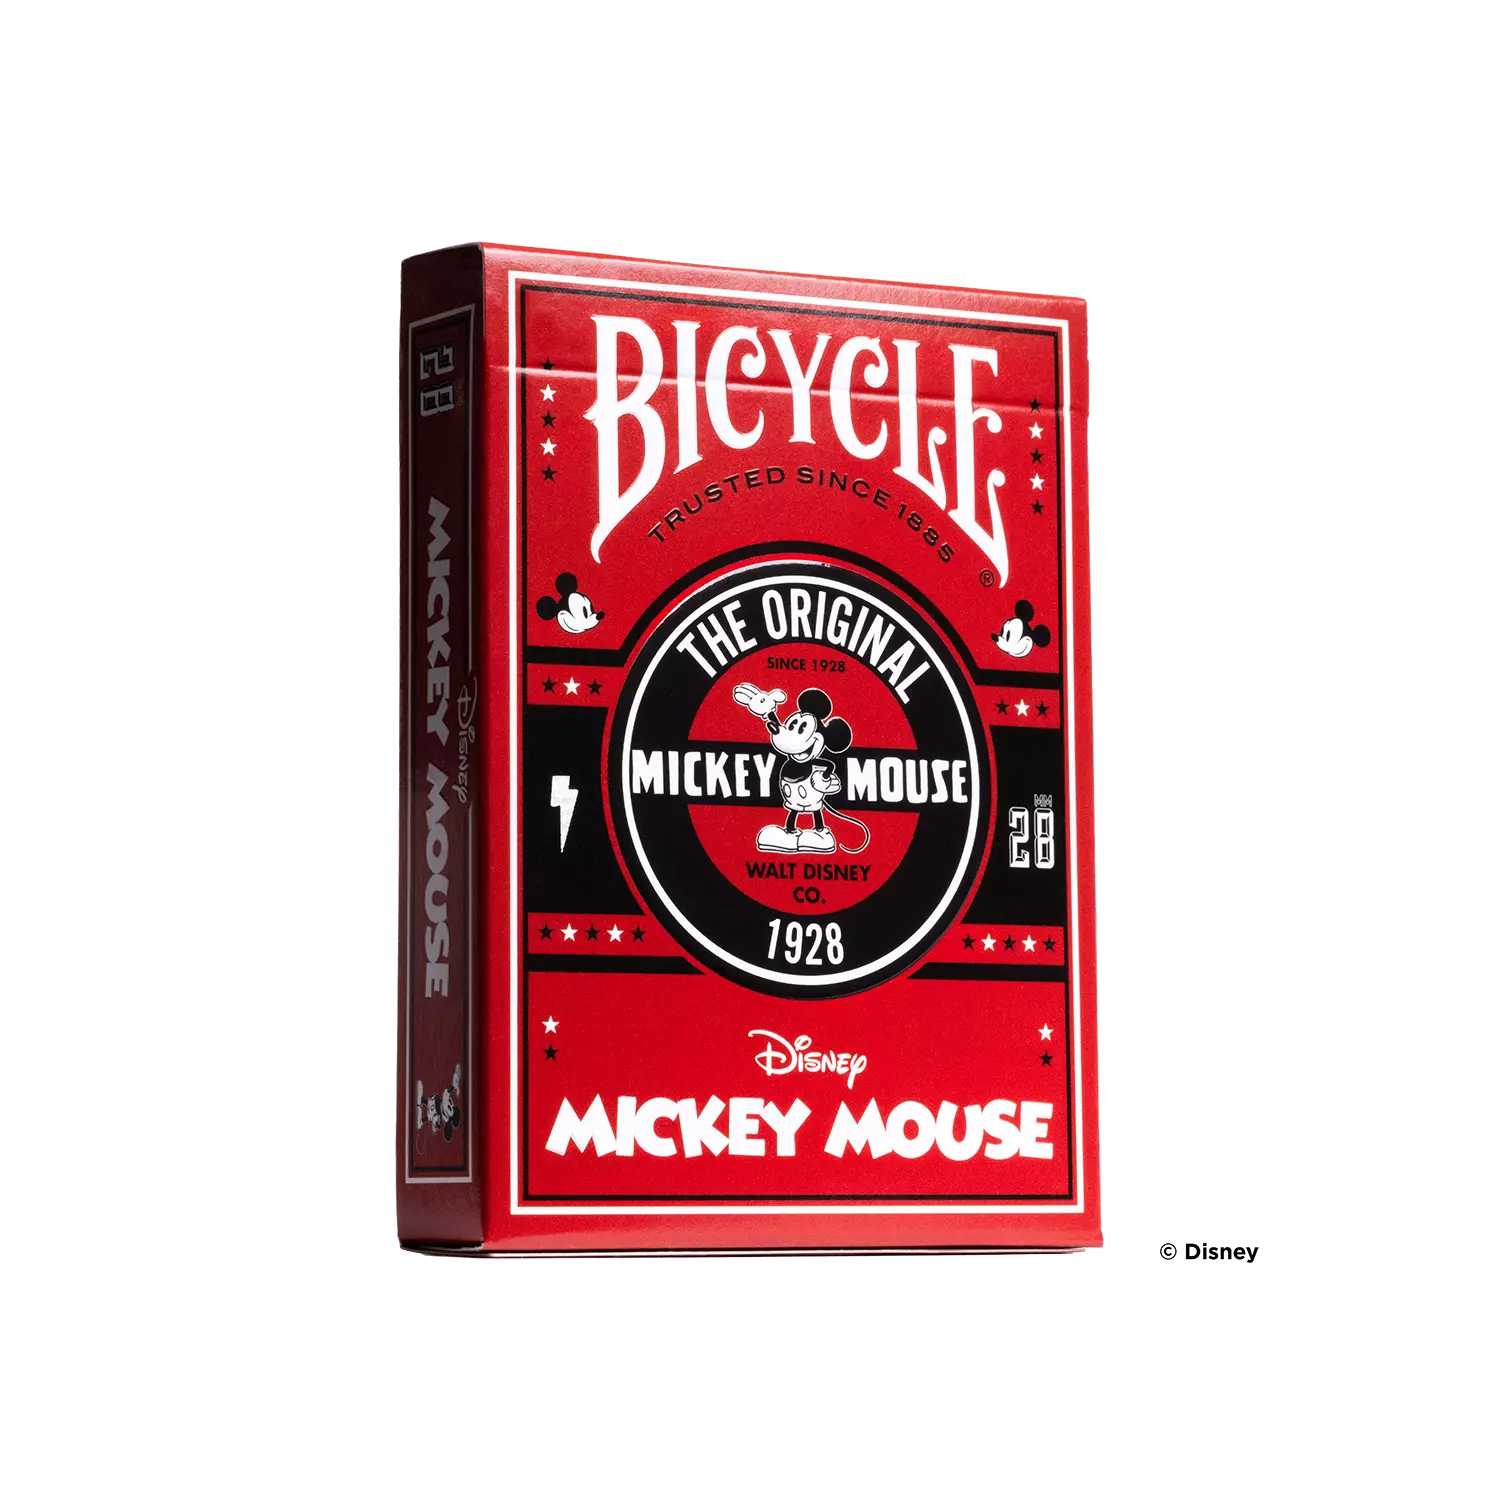 Bicycle - Disney Classic Mickey